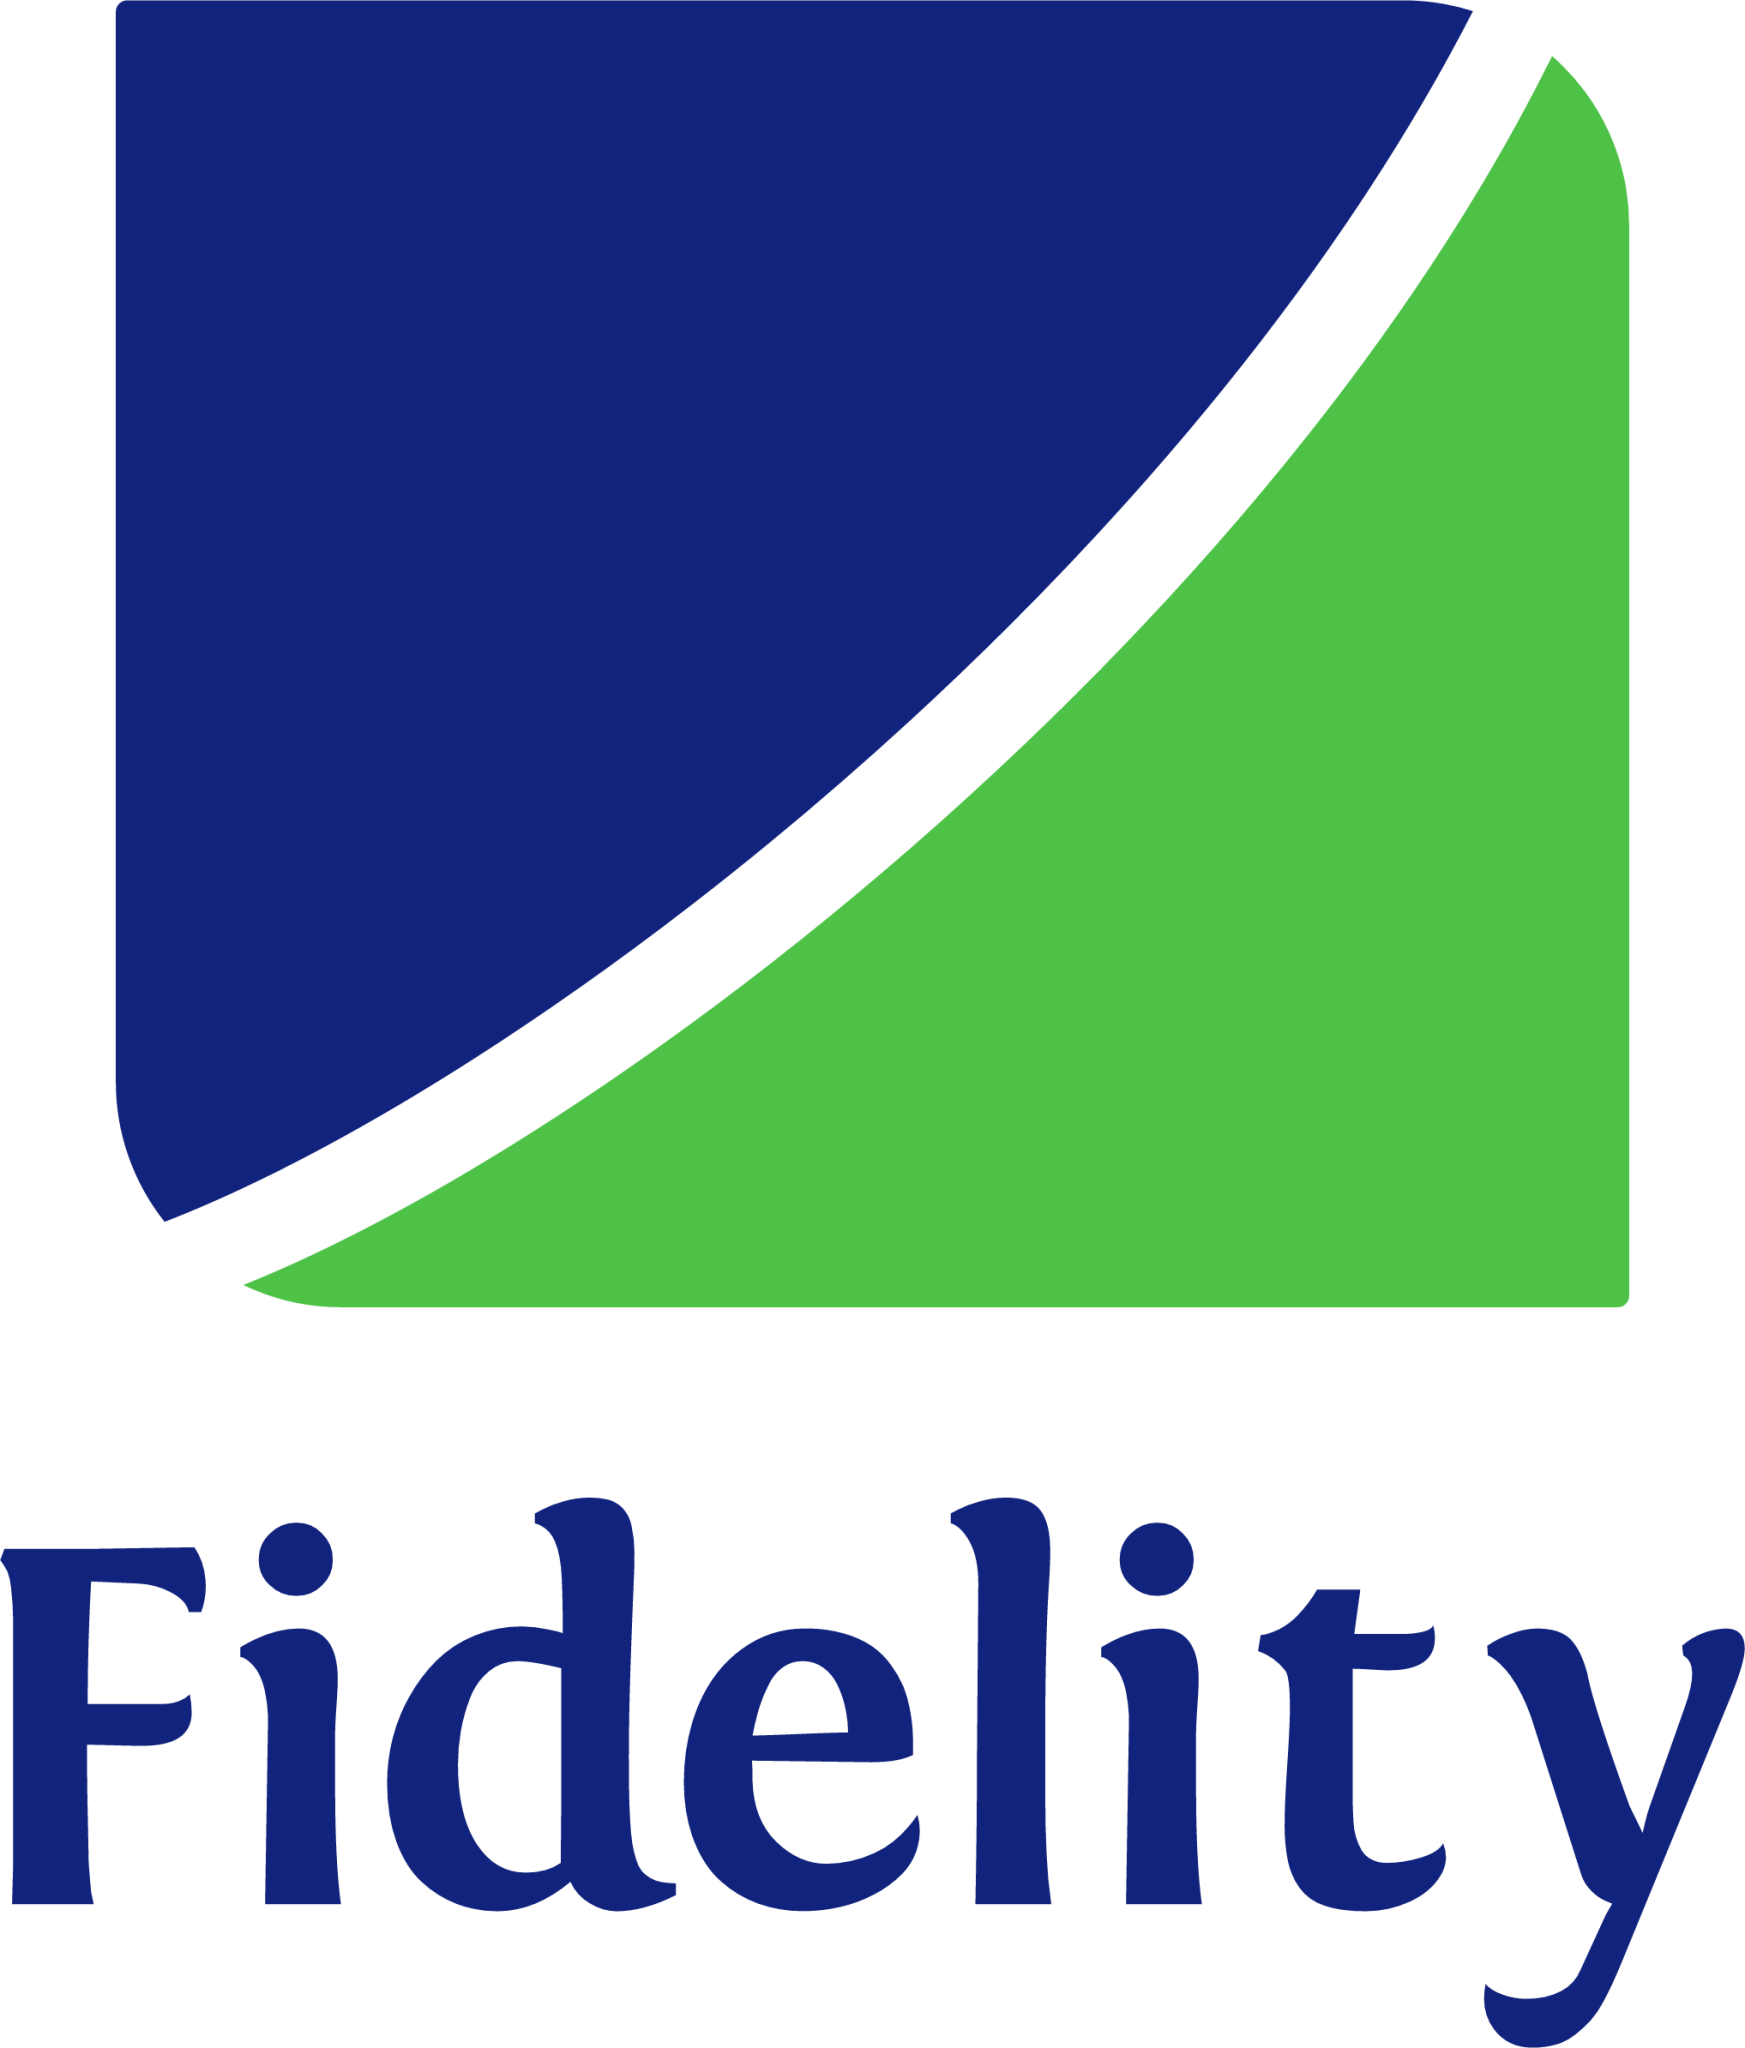 Fidelity Bank Nigeria icon